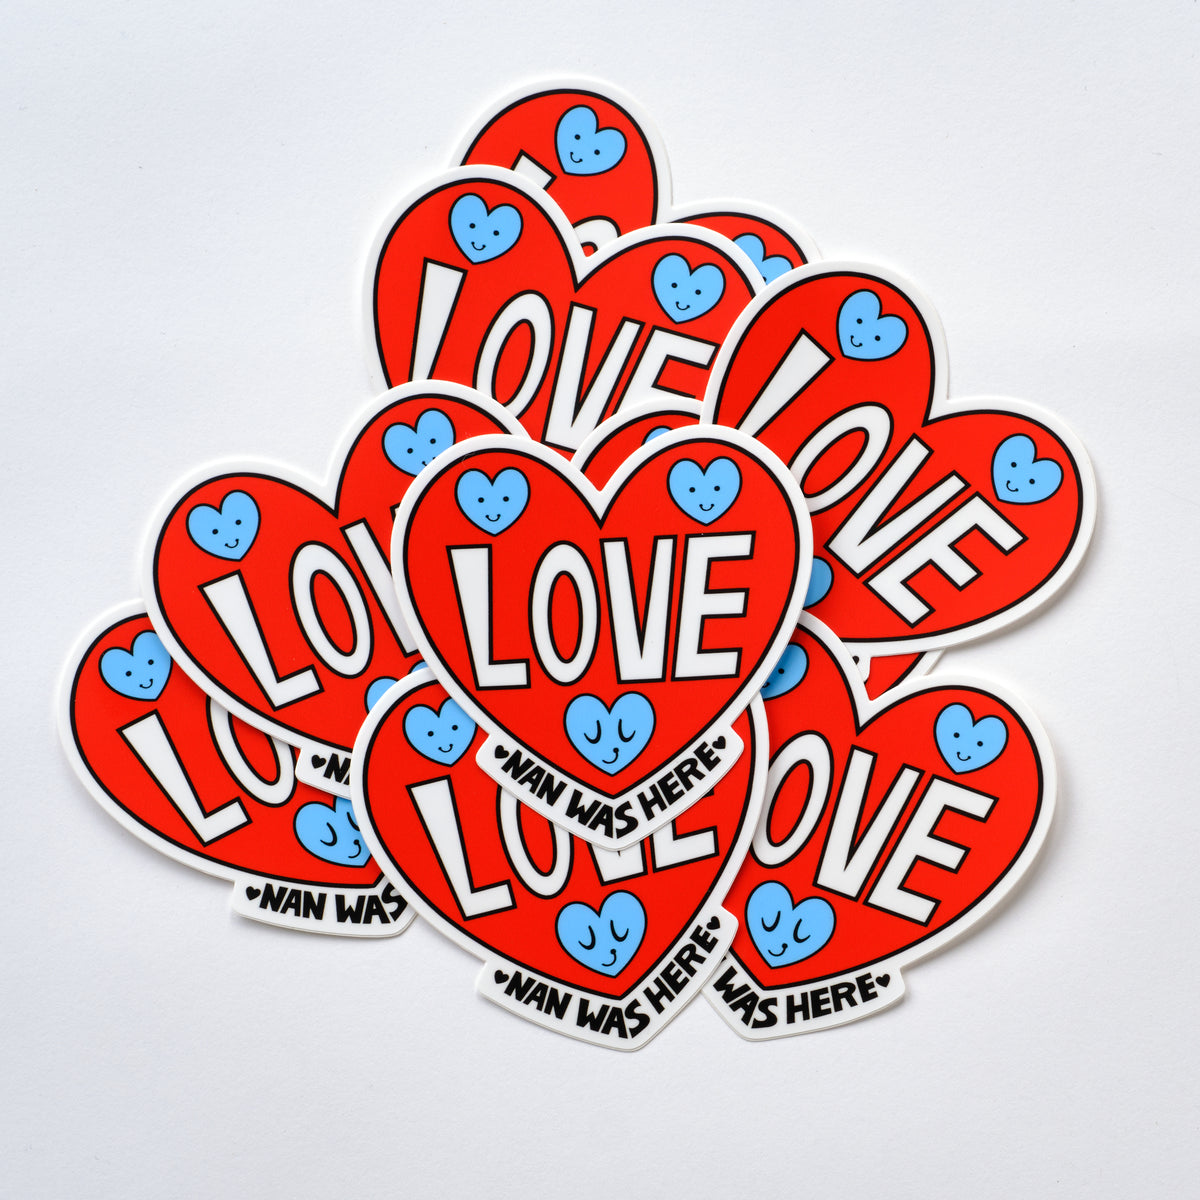 ❤️💙 Love Hearts 💙❤️ - Vinyl Sticker